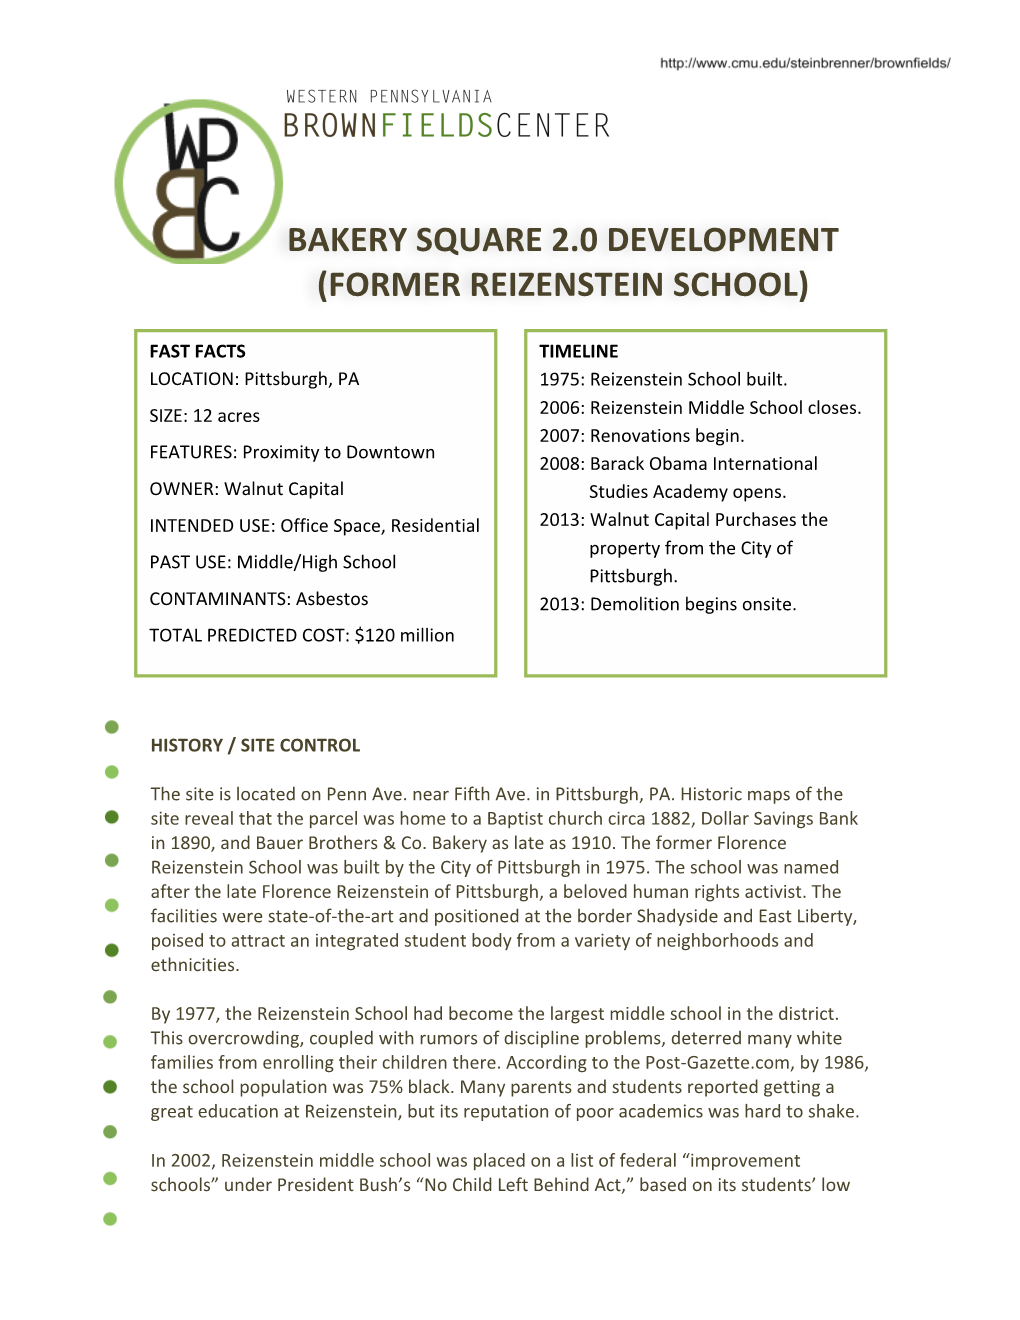 Bakery Square 2.0 Development